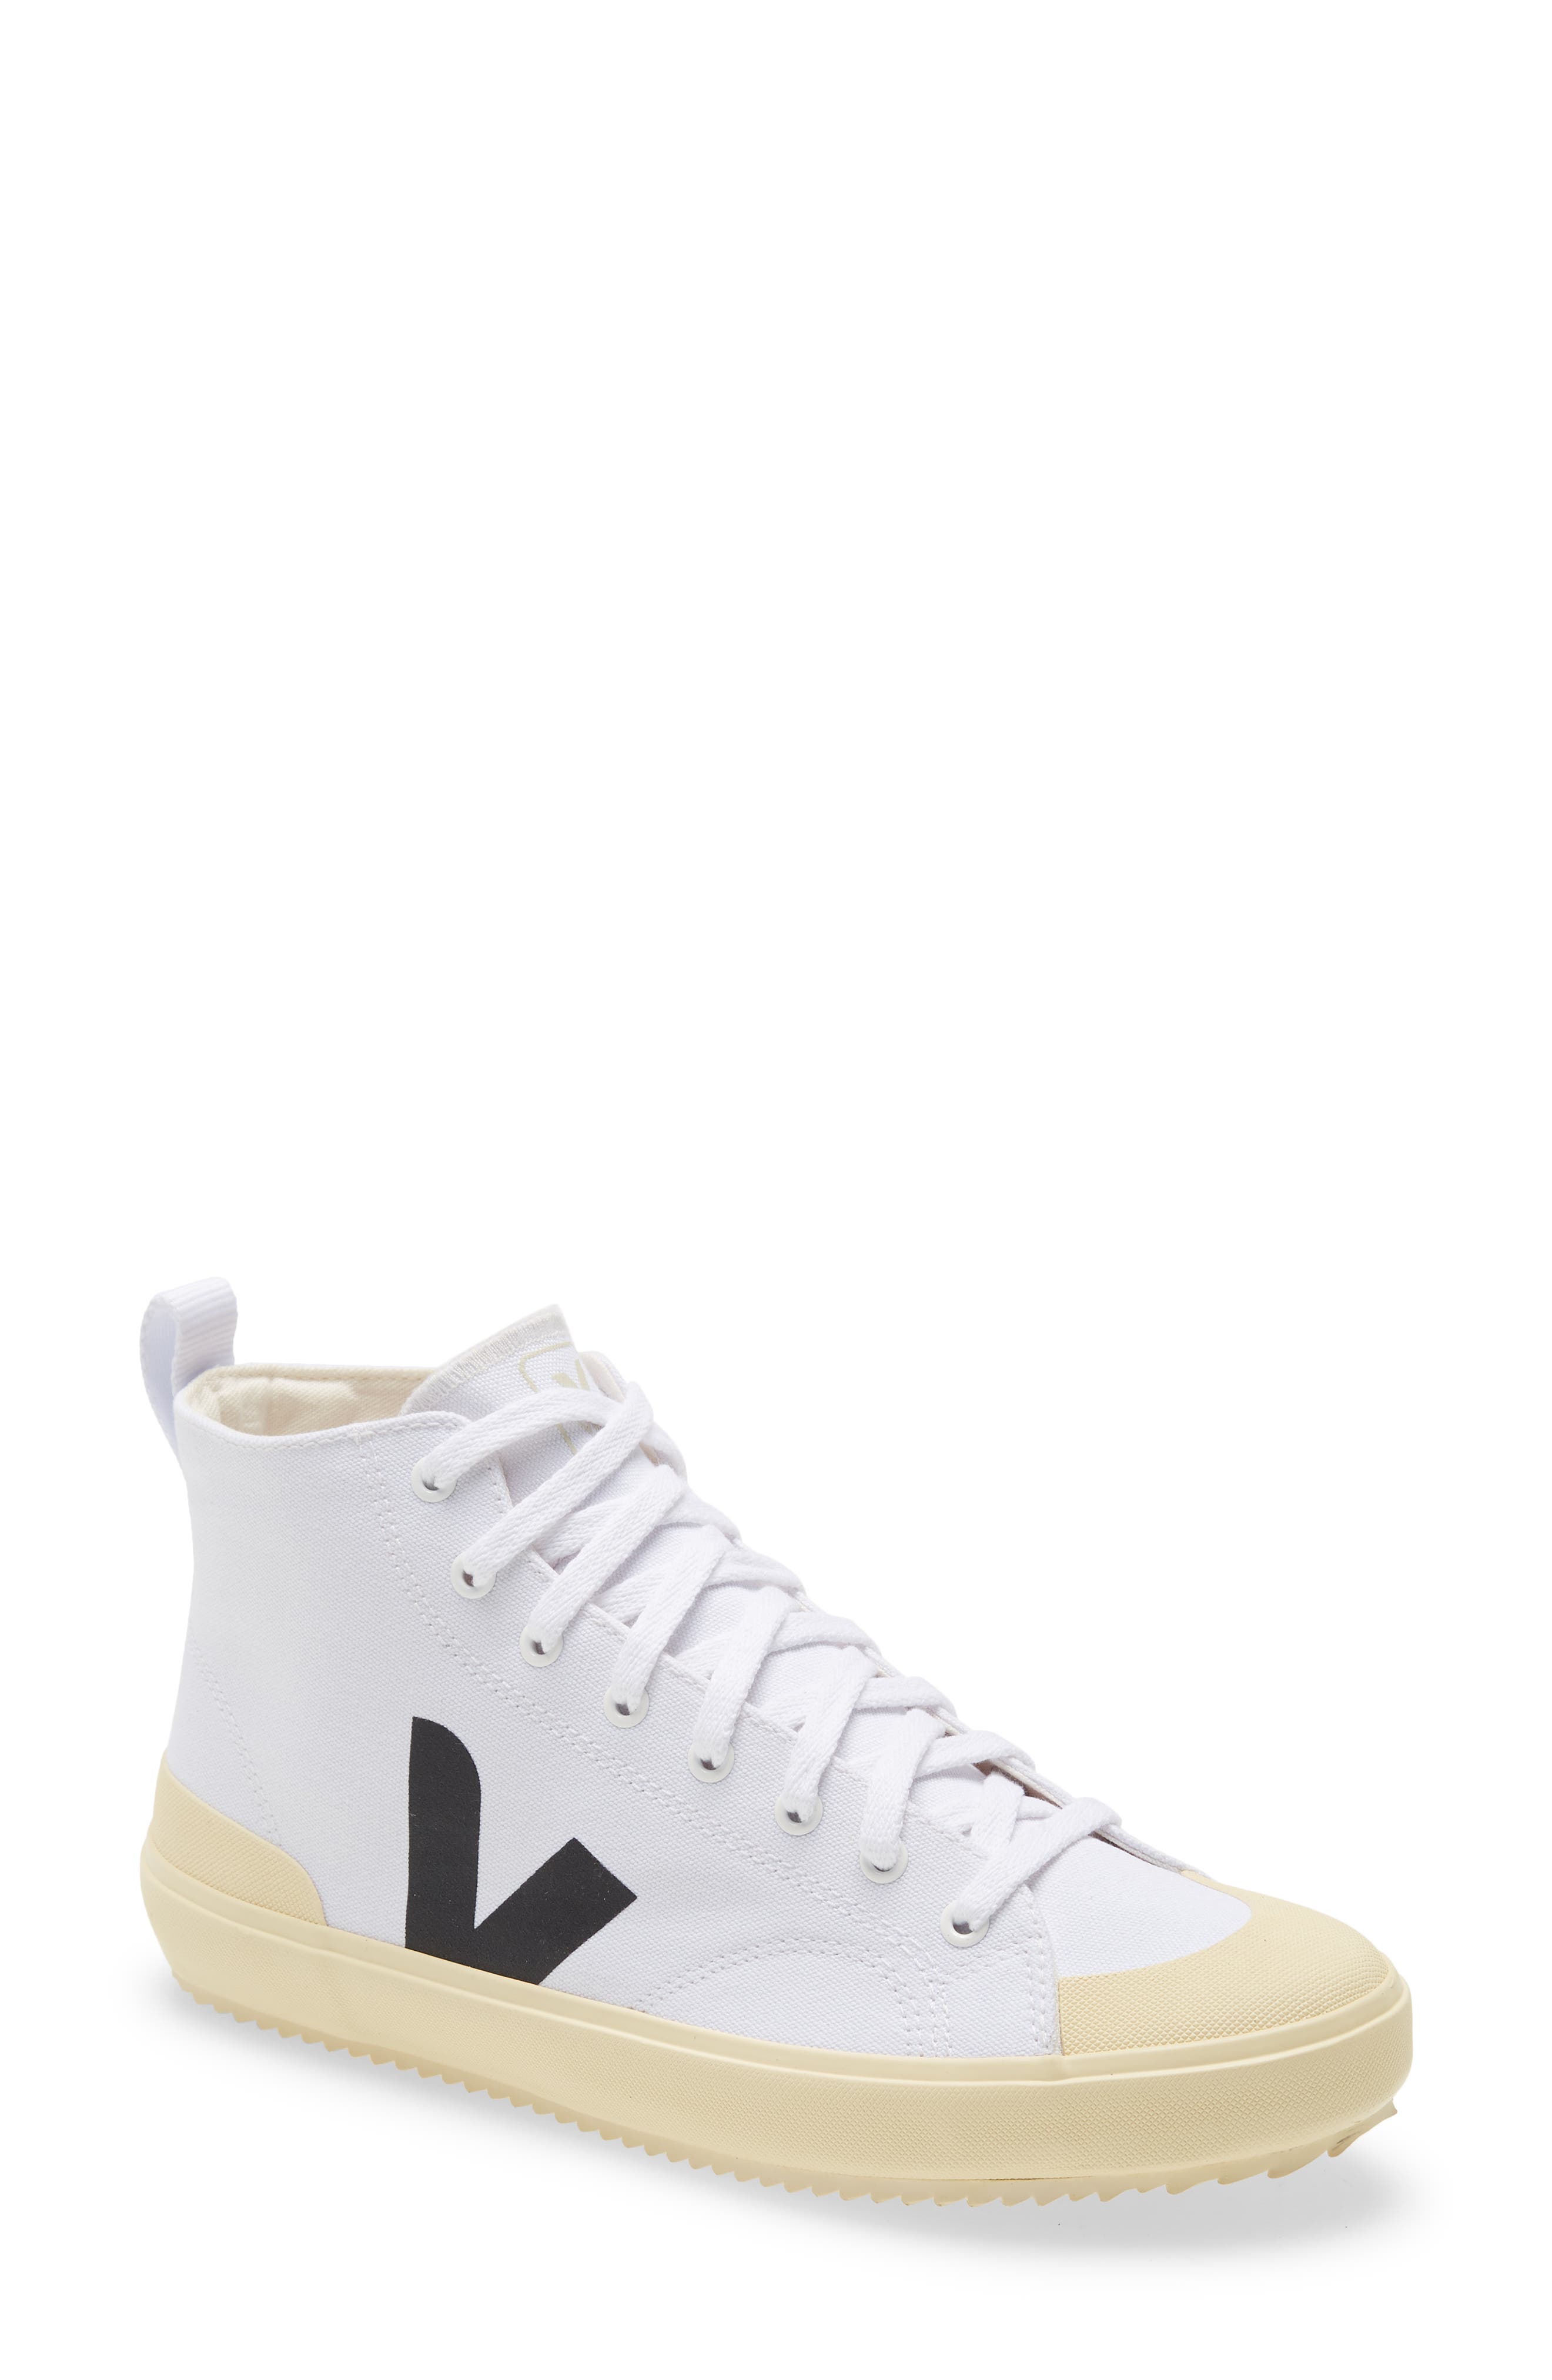 Veja Nova Canvas High Top Sneaker in White/Black/Butter Sole at Nordstrom, Size 10Us